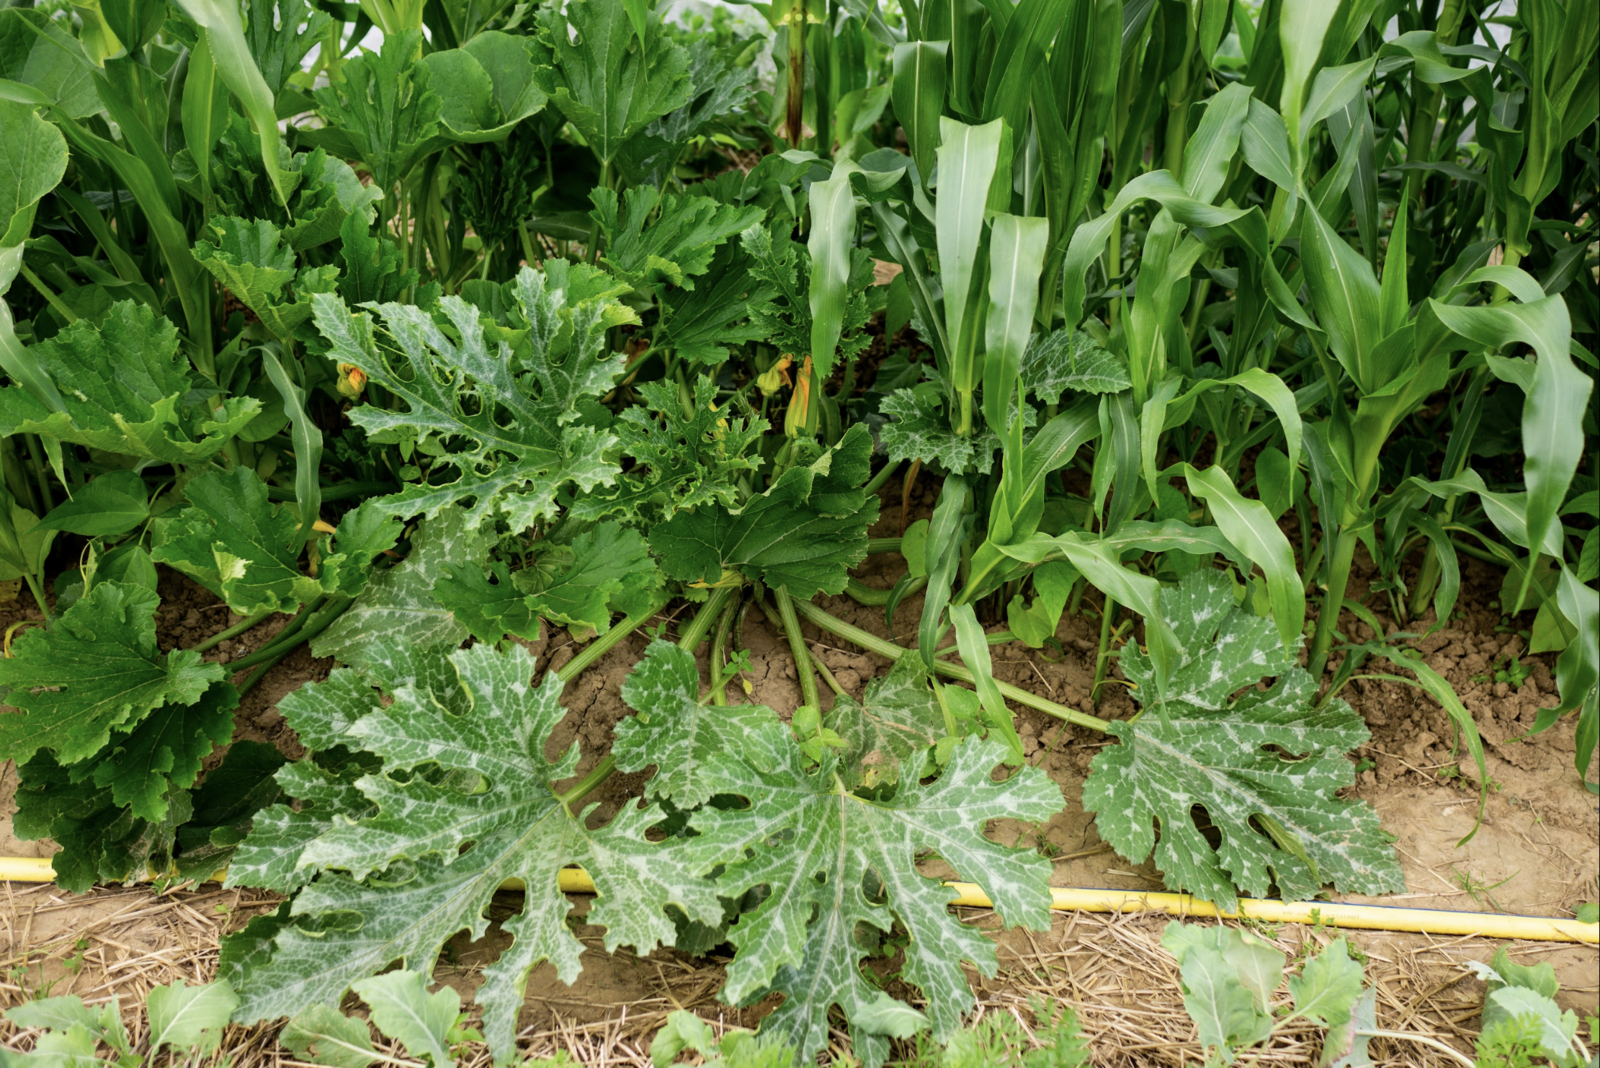 Zucchini: Companion plants, antagonistic plants with a companion planting plan